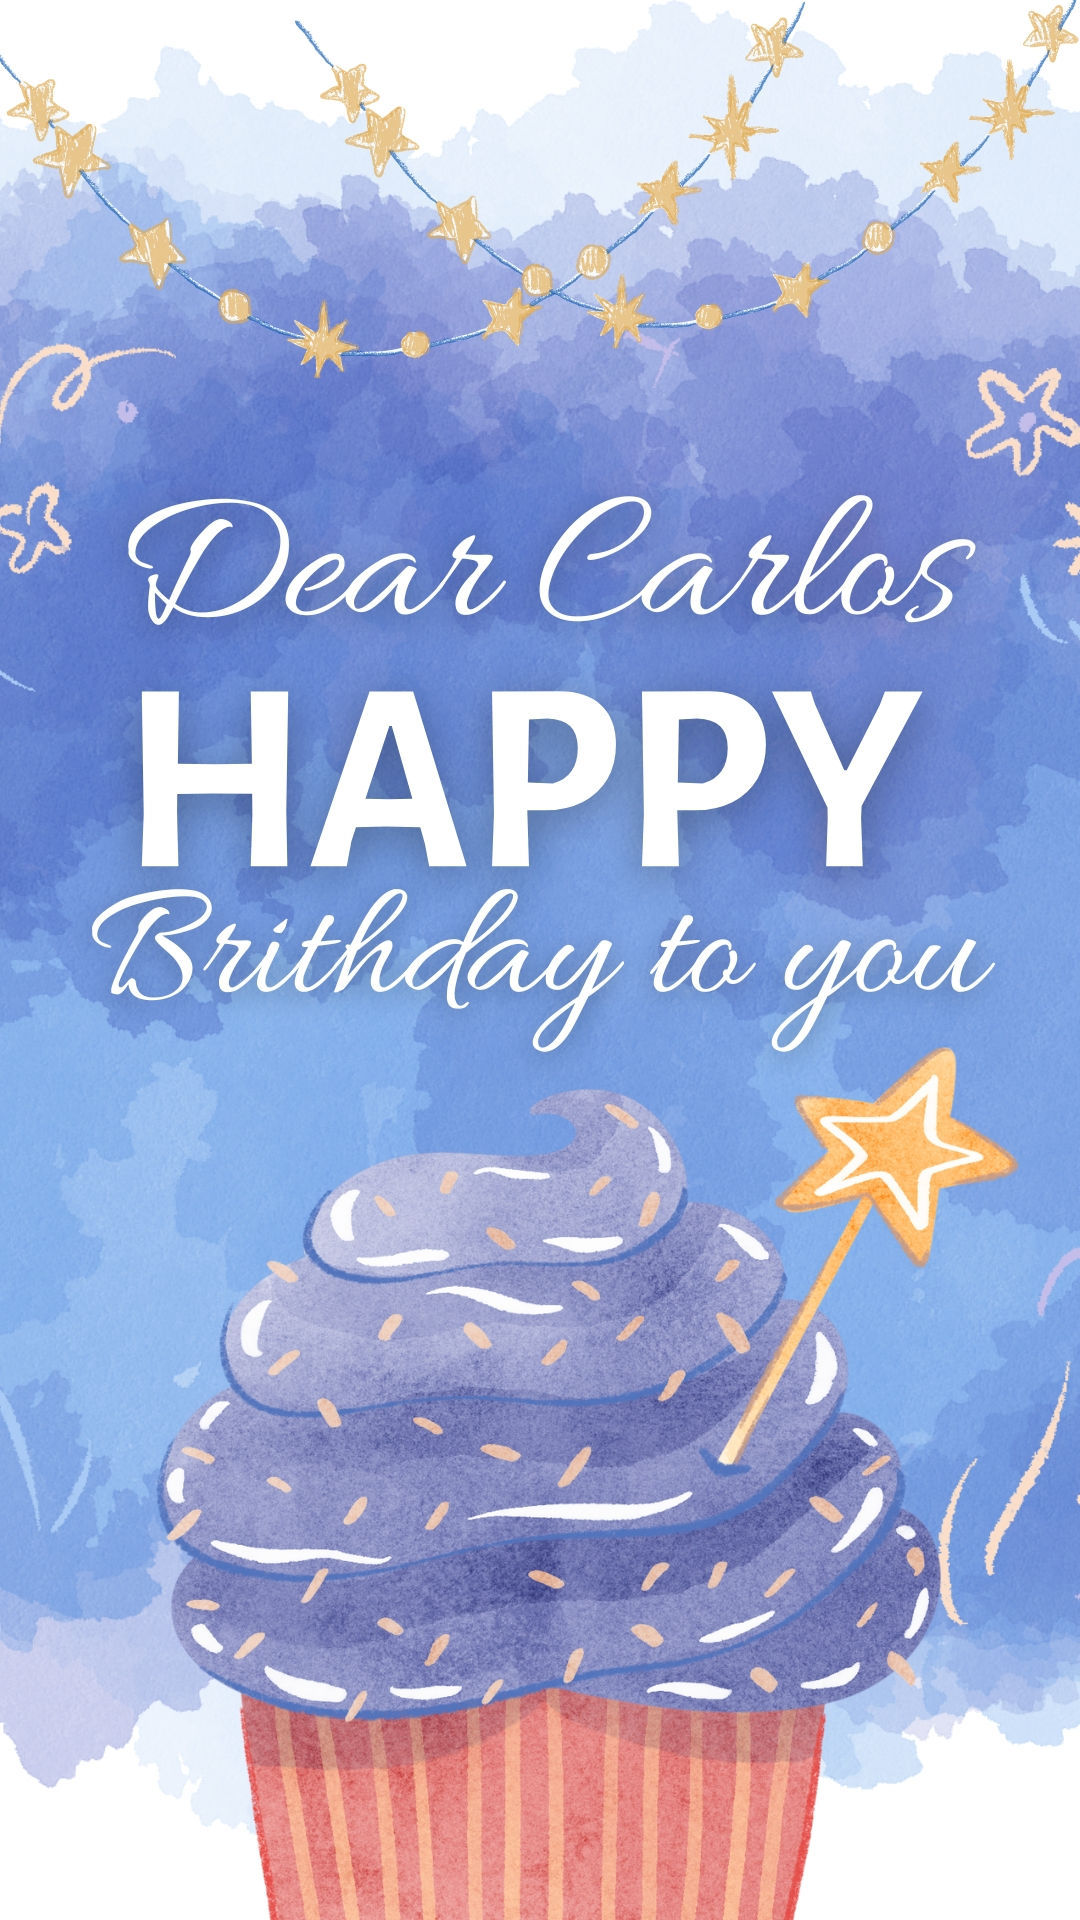 Happy Birthday to Carlos